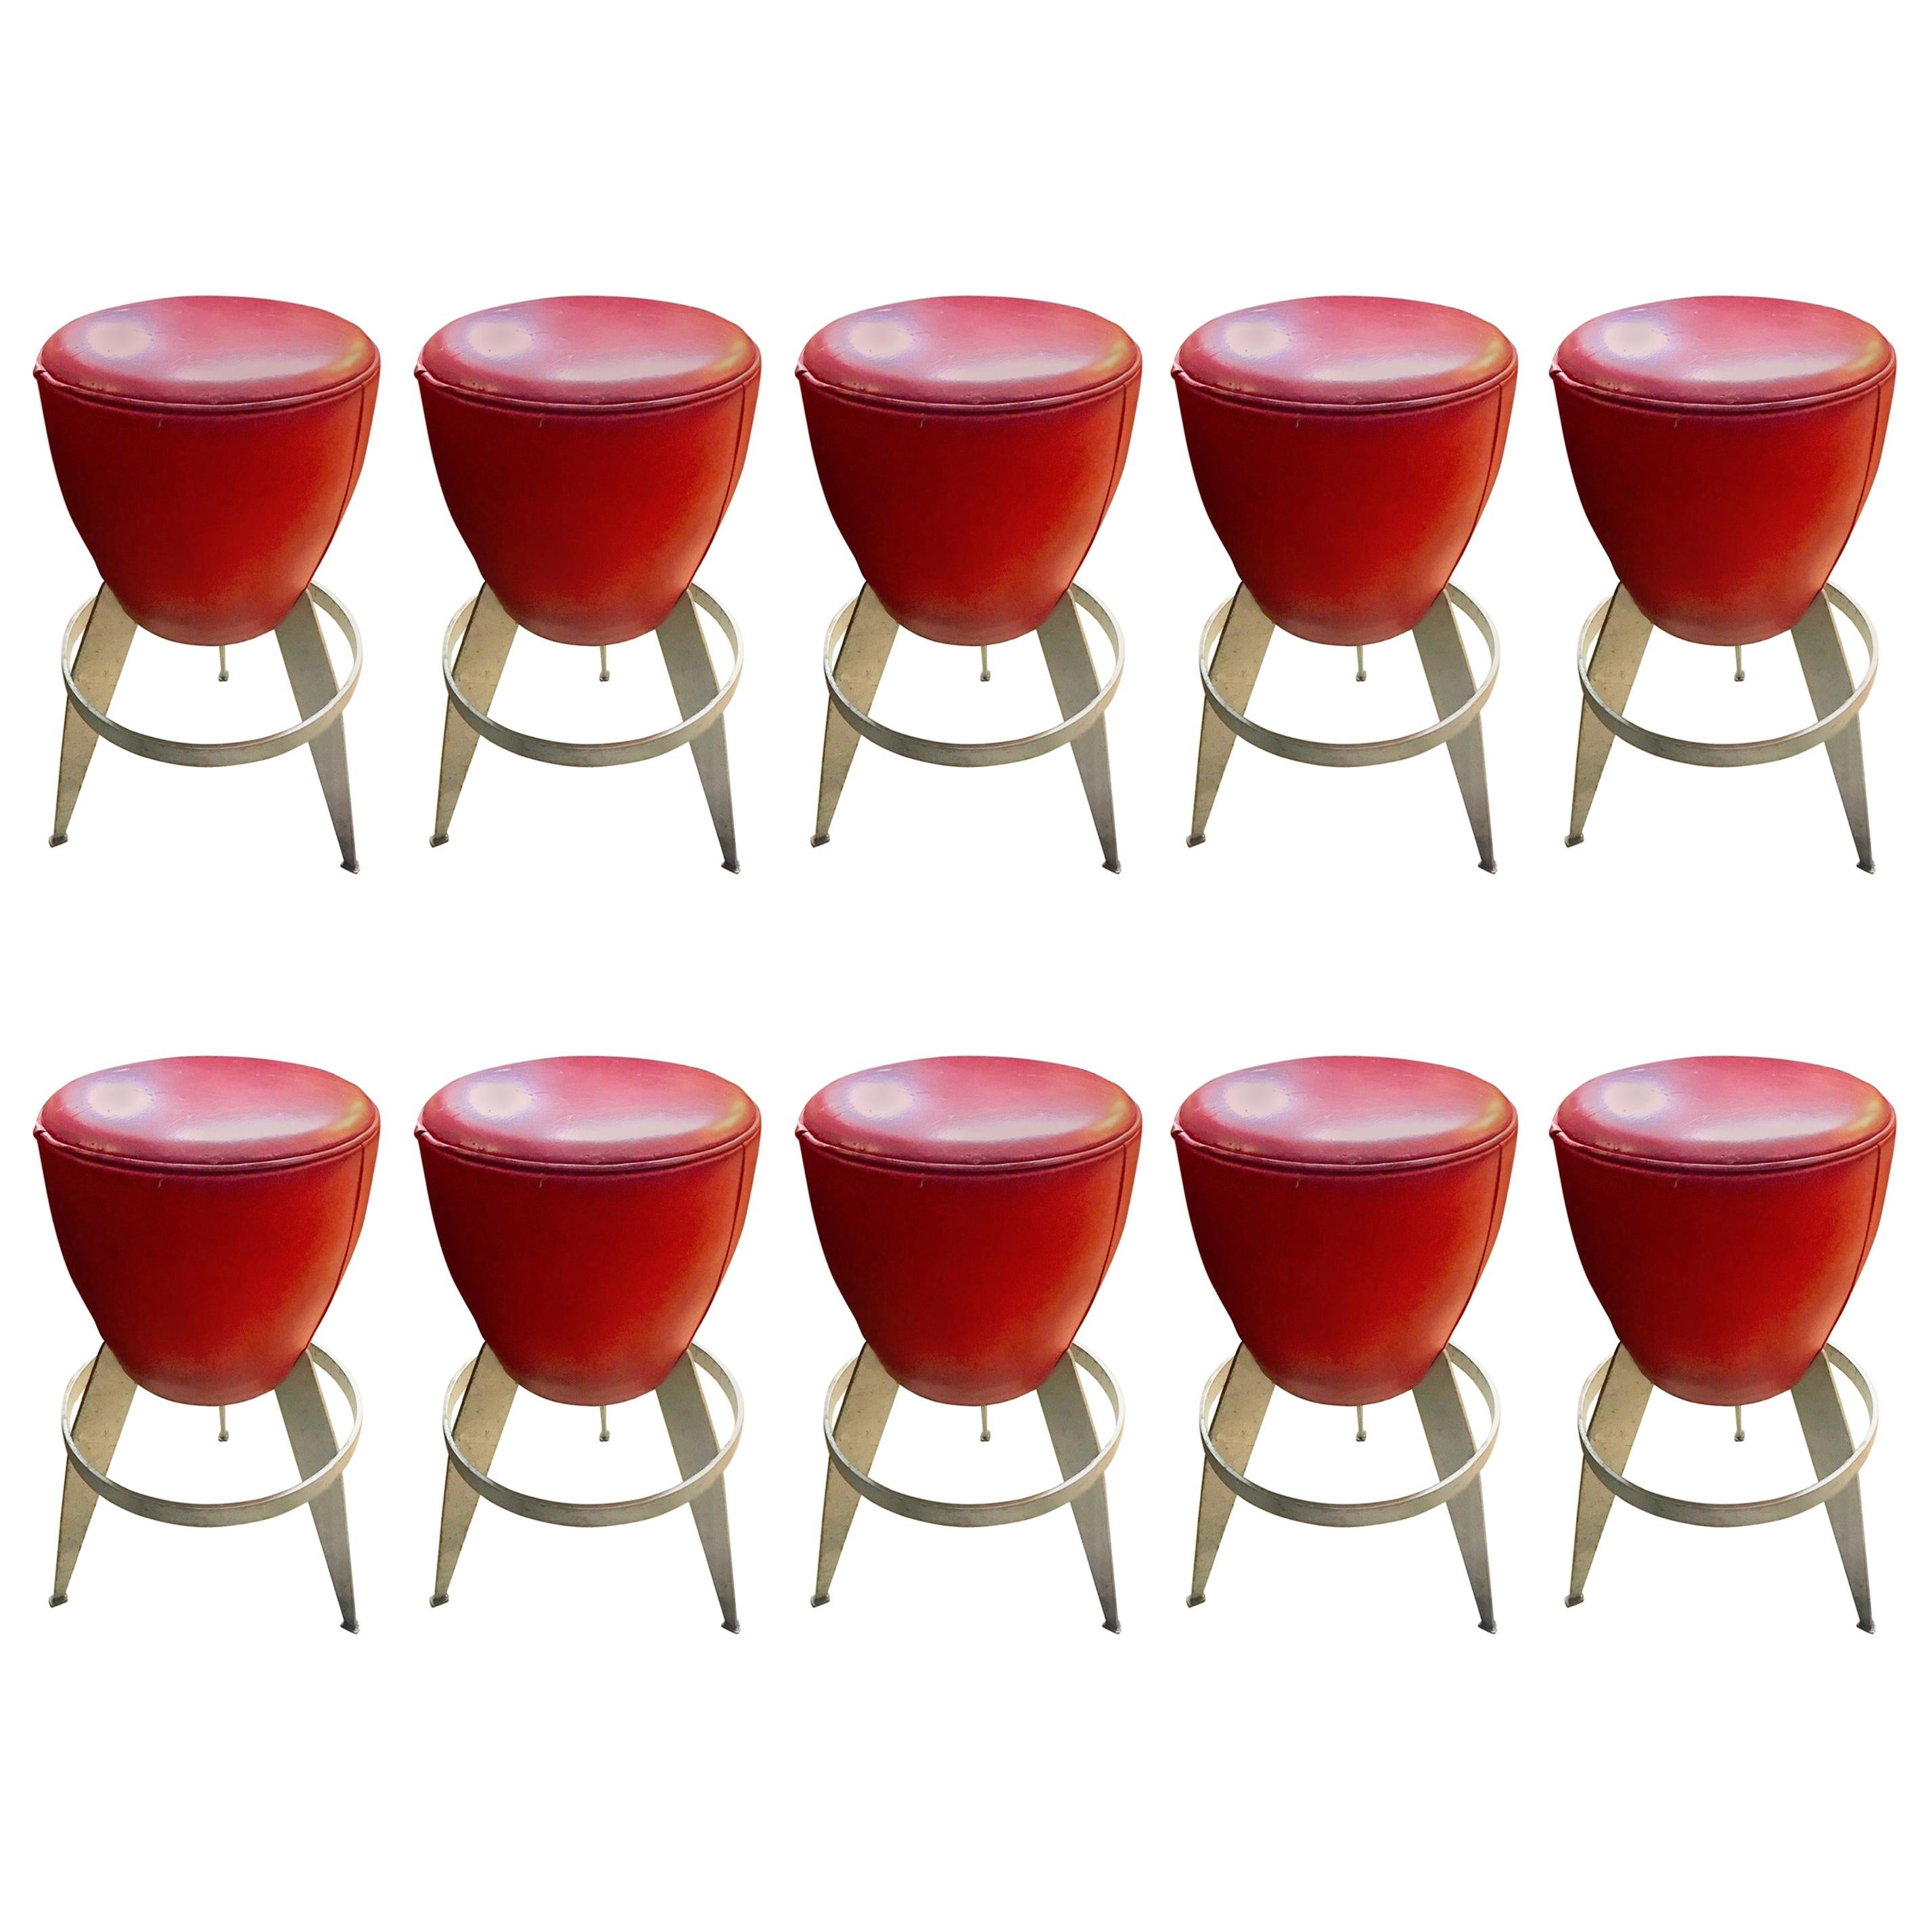 Ten Swedish Bar Stools by Johanson Design